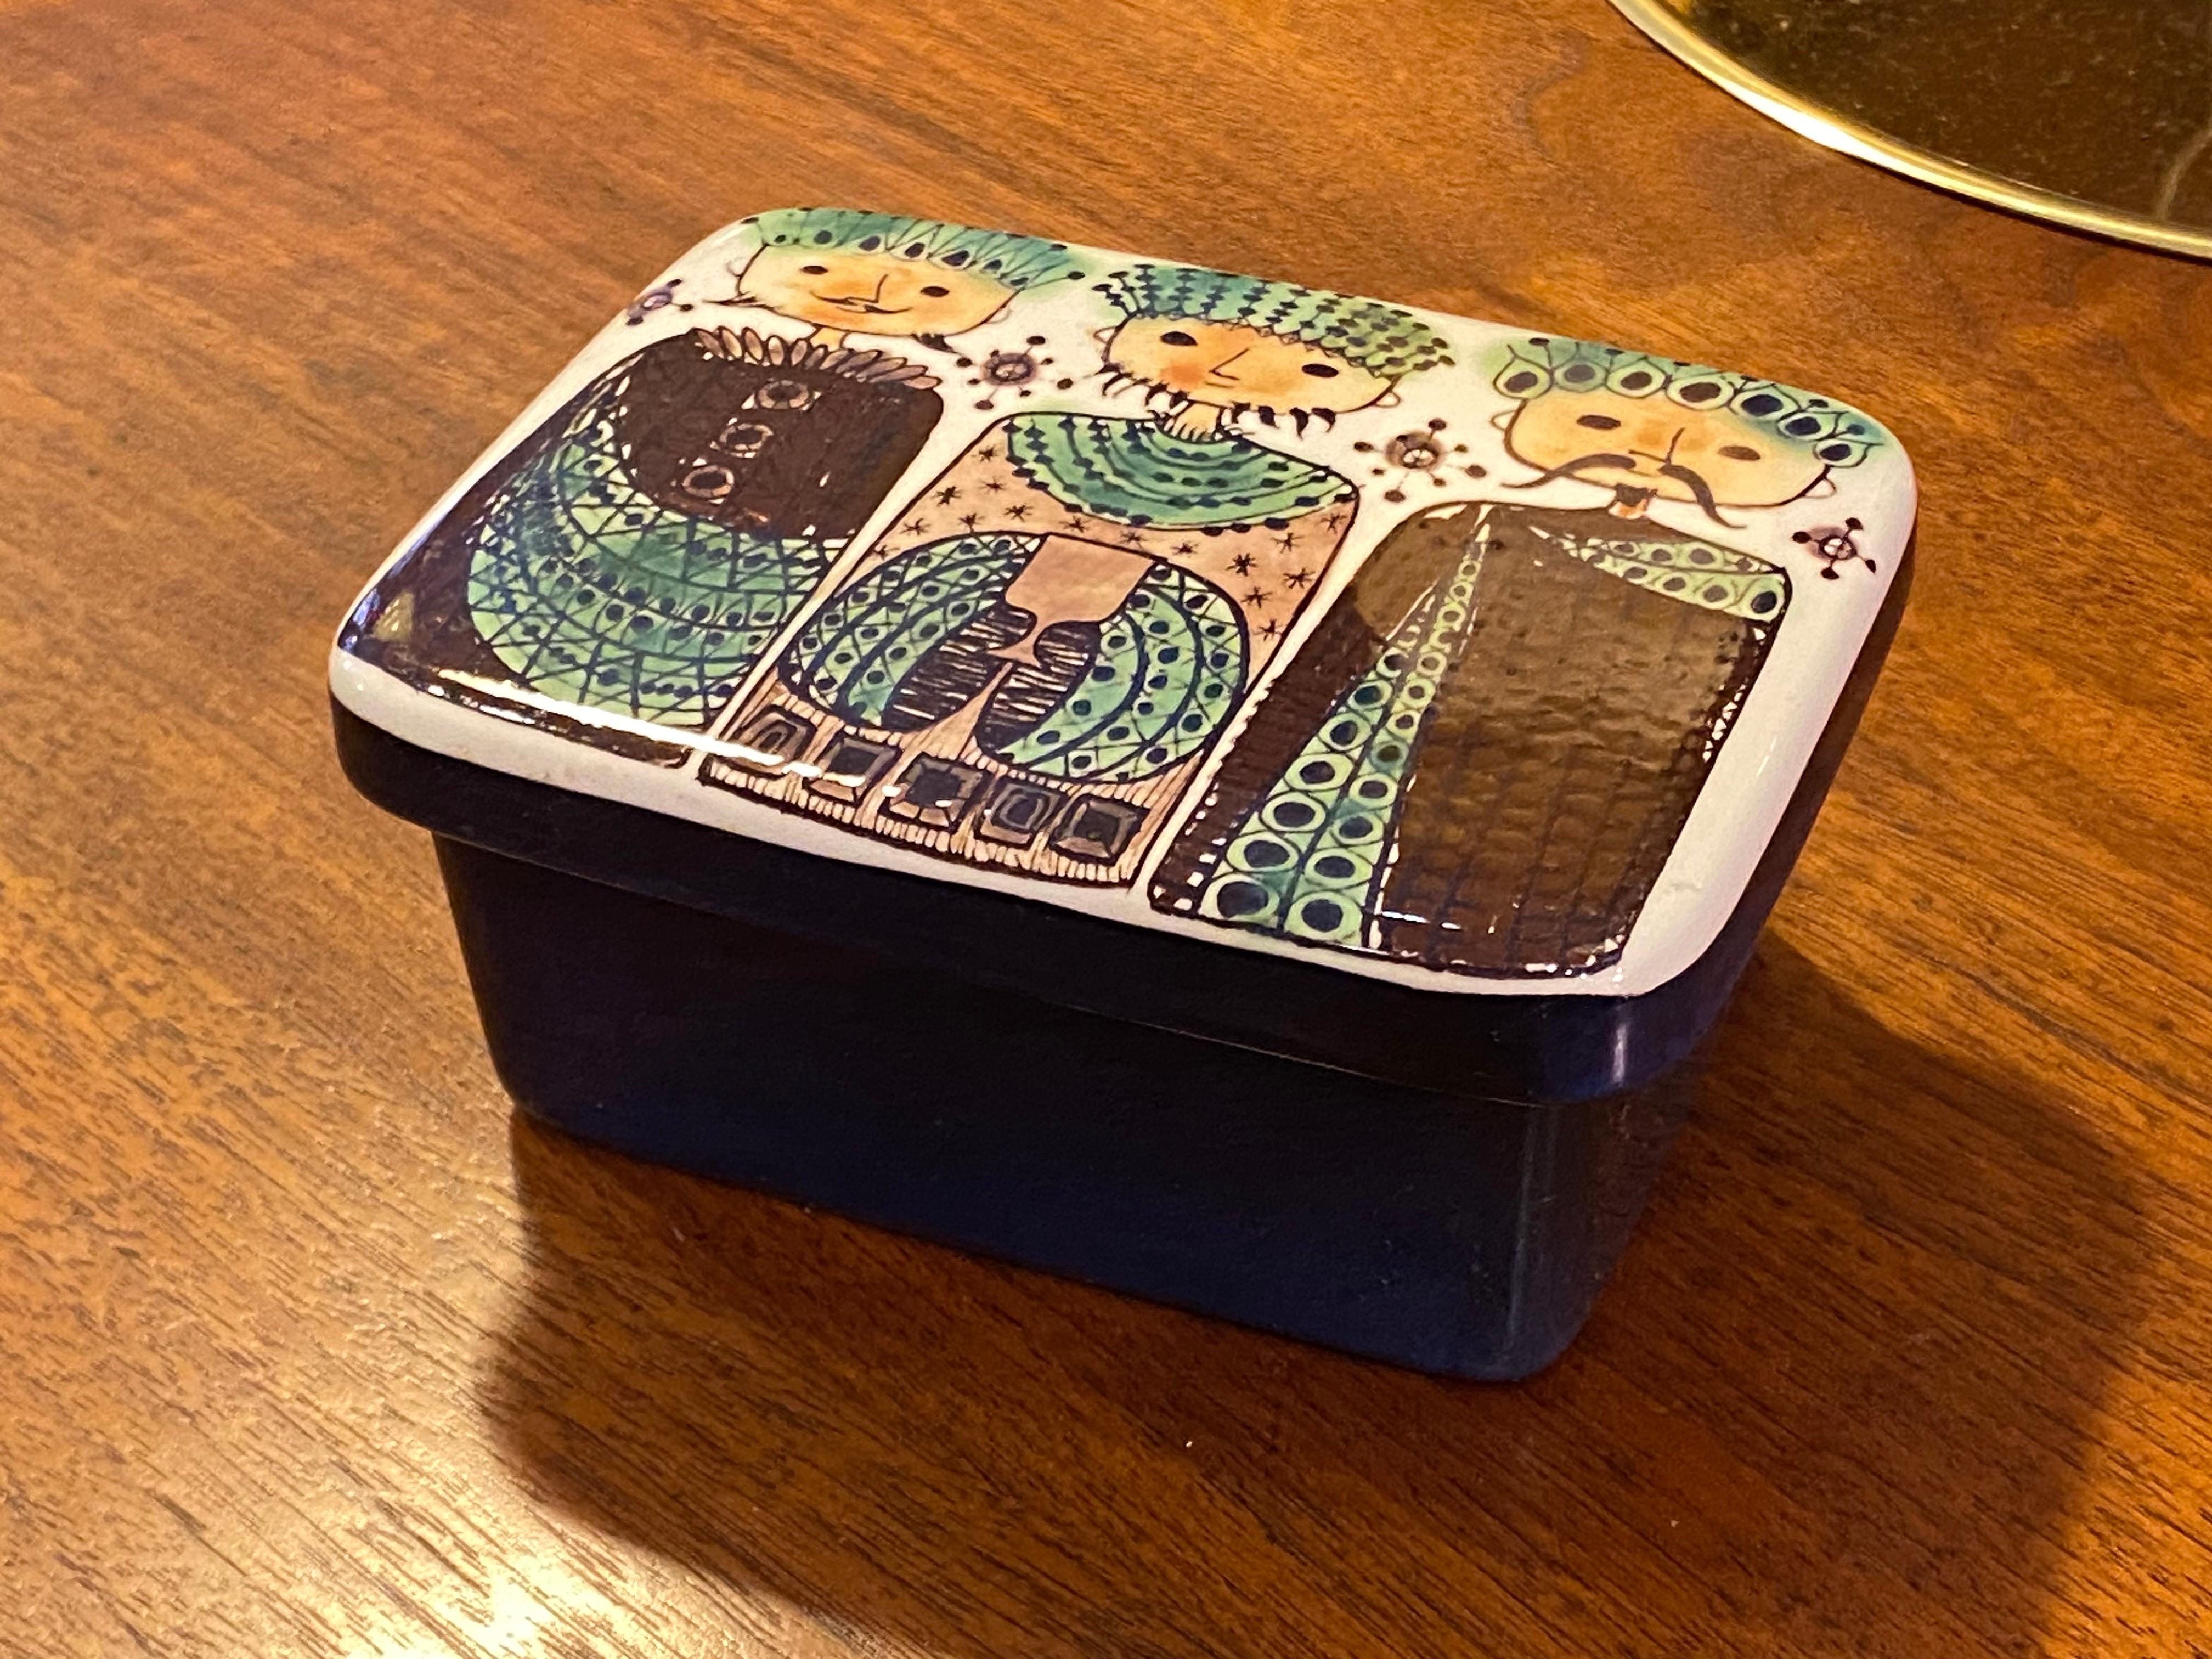 Royal Copenhagen Ceramic Lidded Box.  Nice original condition with no damage or repairs.